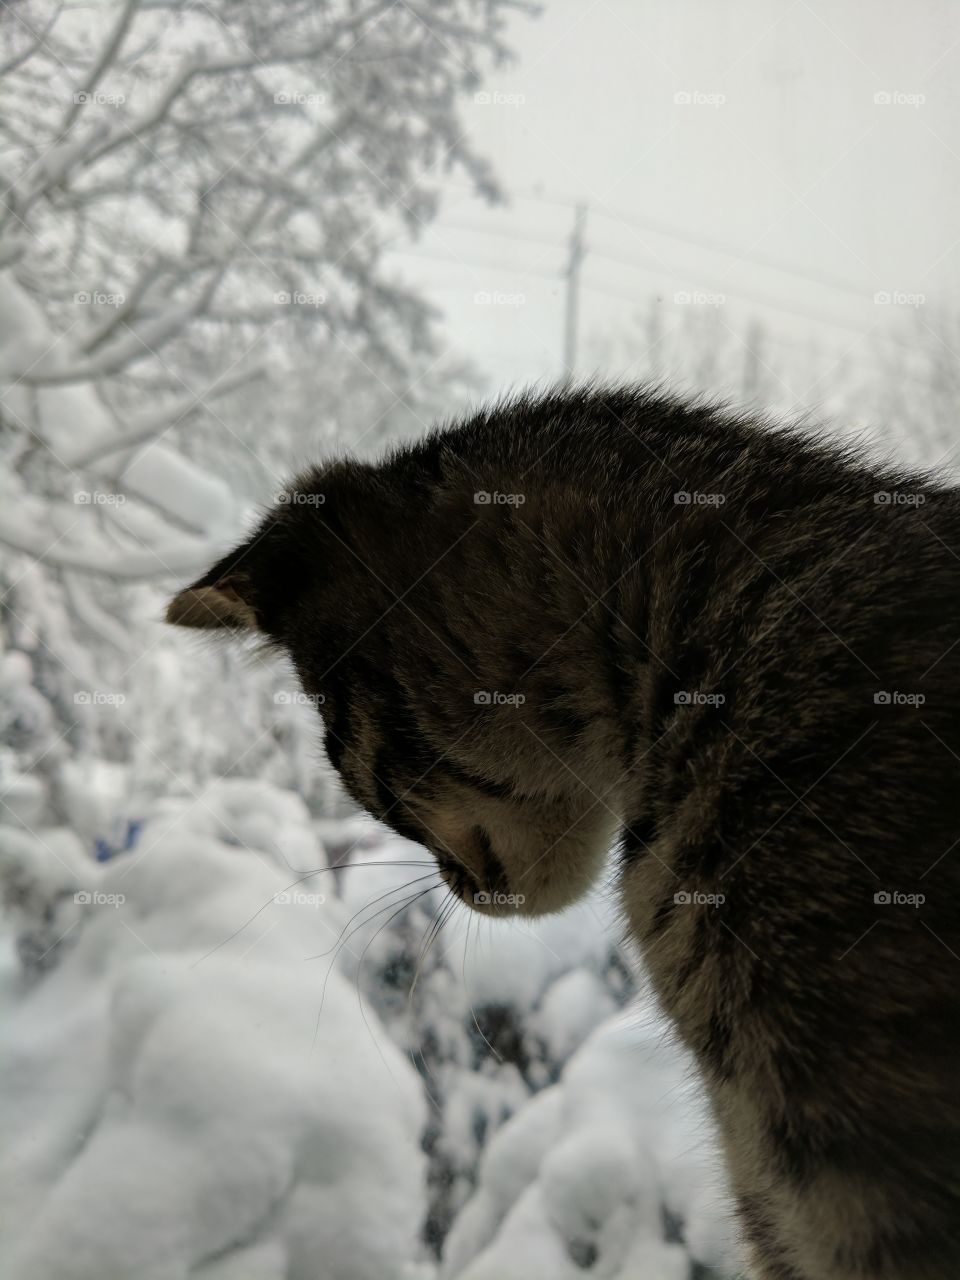 Kitten watching snowfall